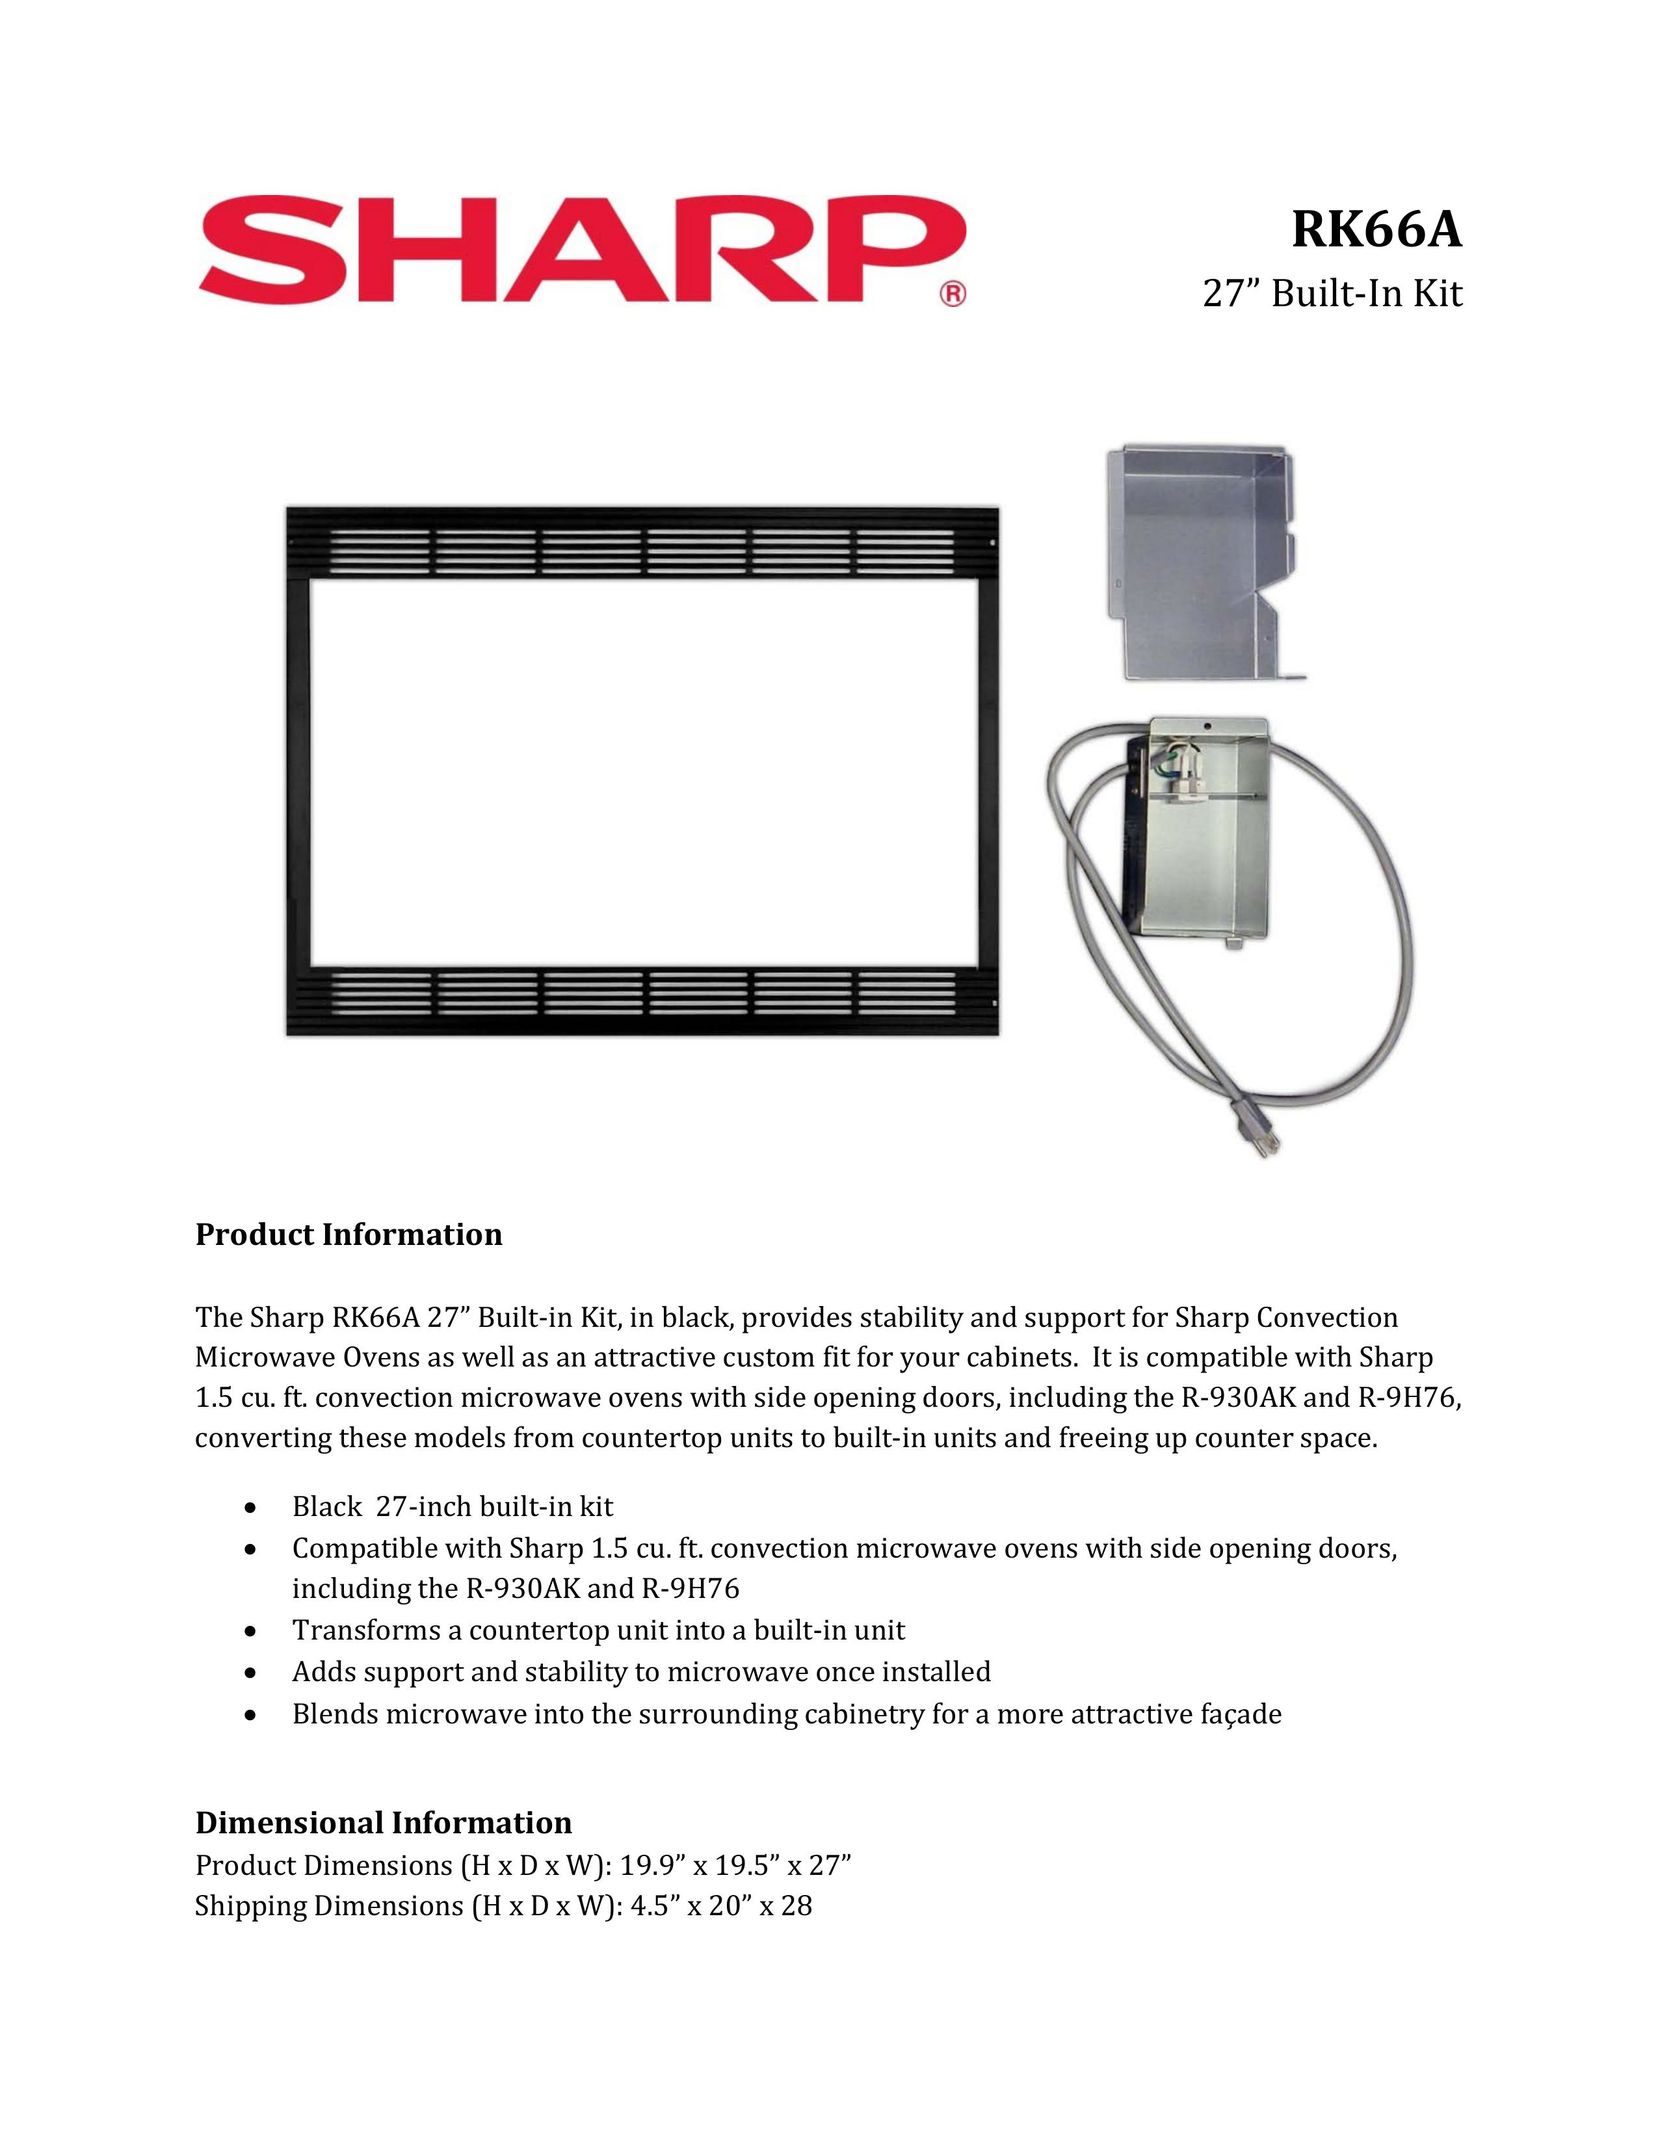 Sharp RK66A - BLACK Appliance Trim Kit User Manual